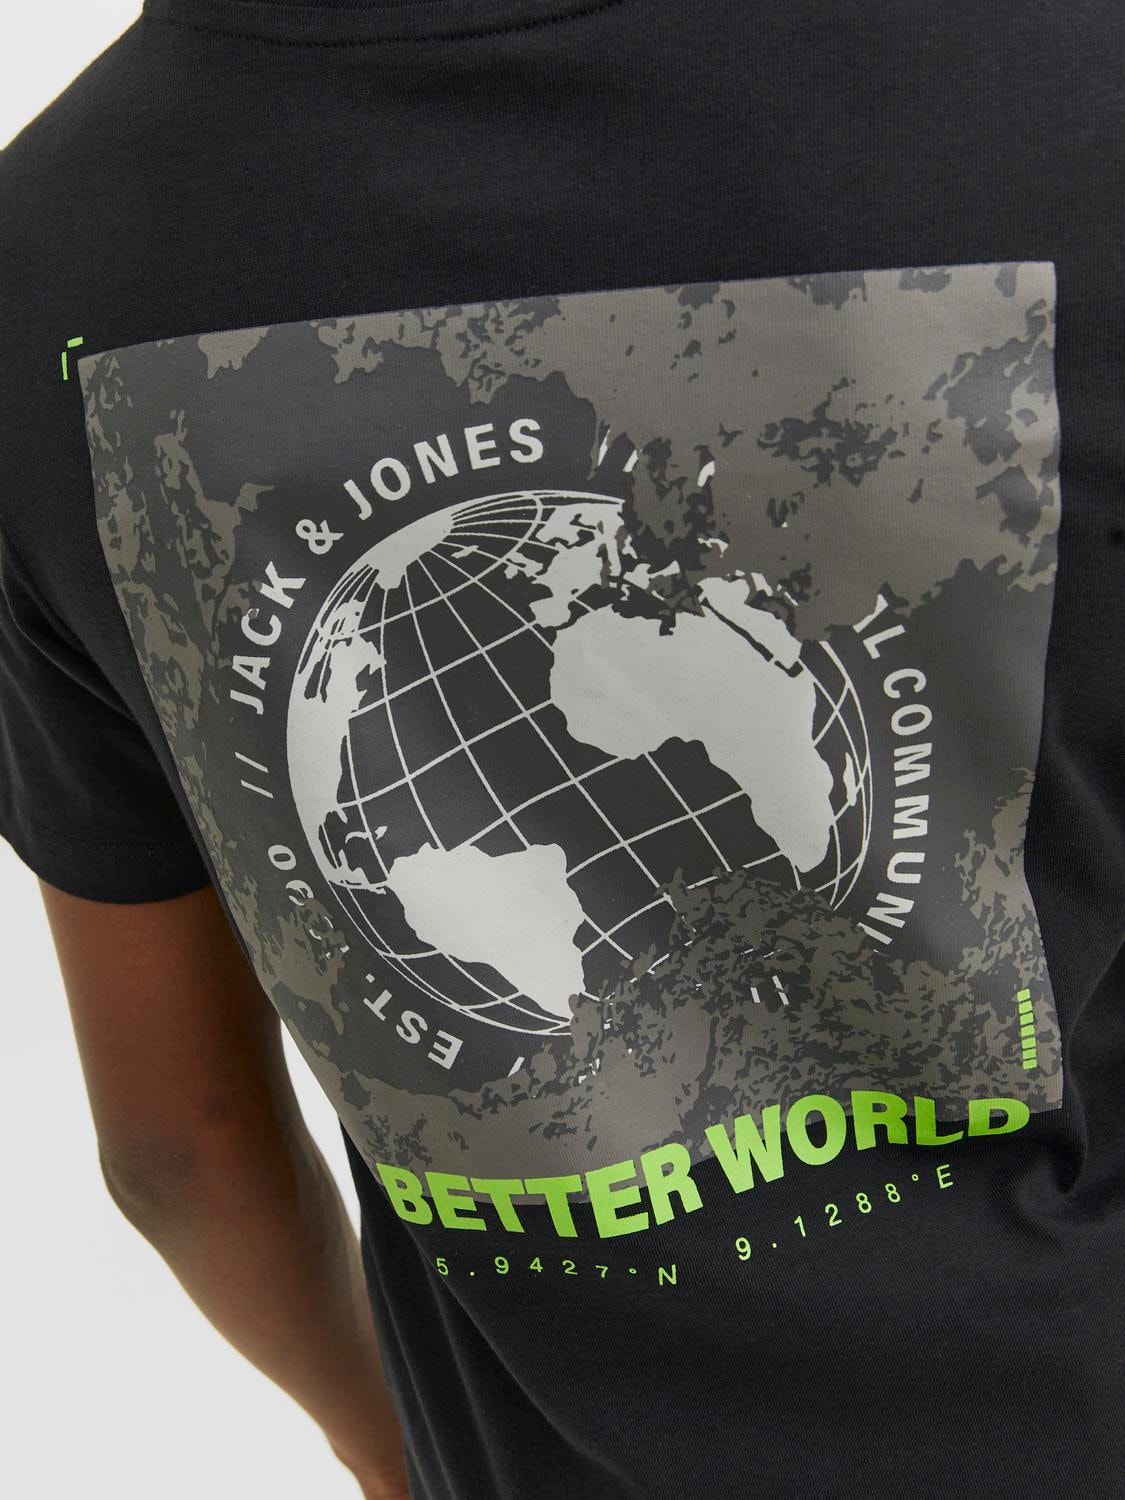 Jack & Jones Gedruckt T-shirt Für jungs -Black - 12240968